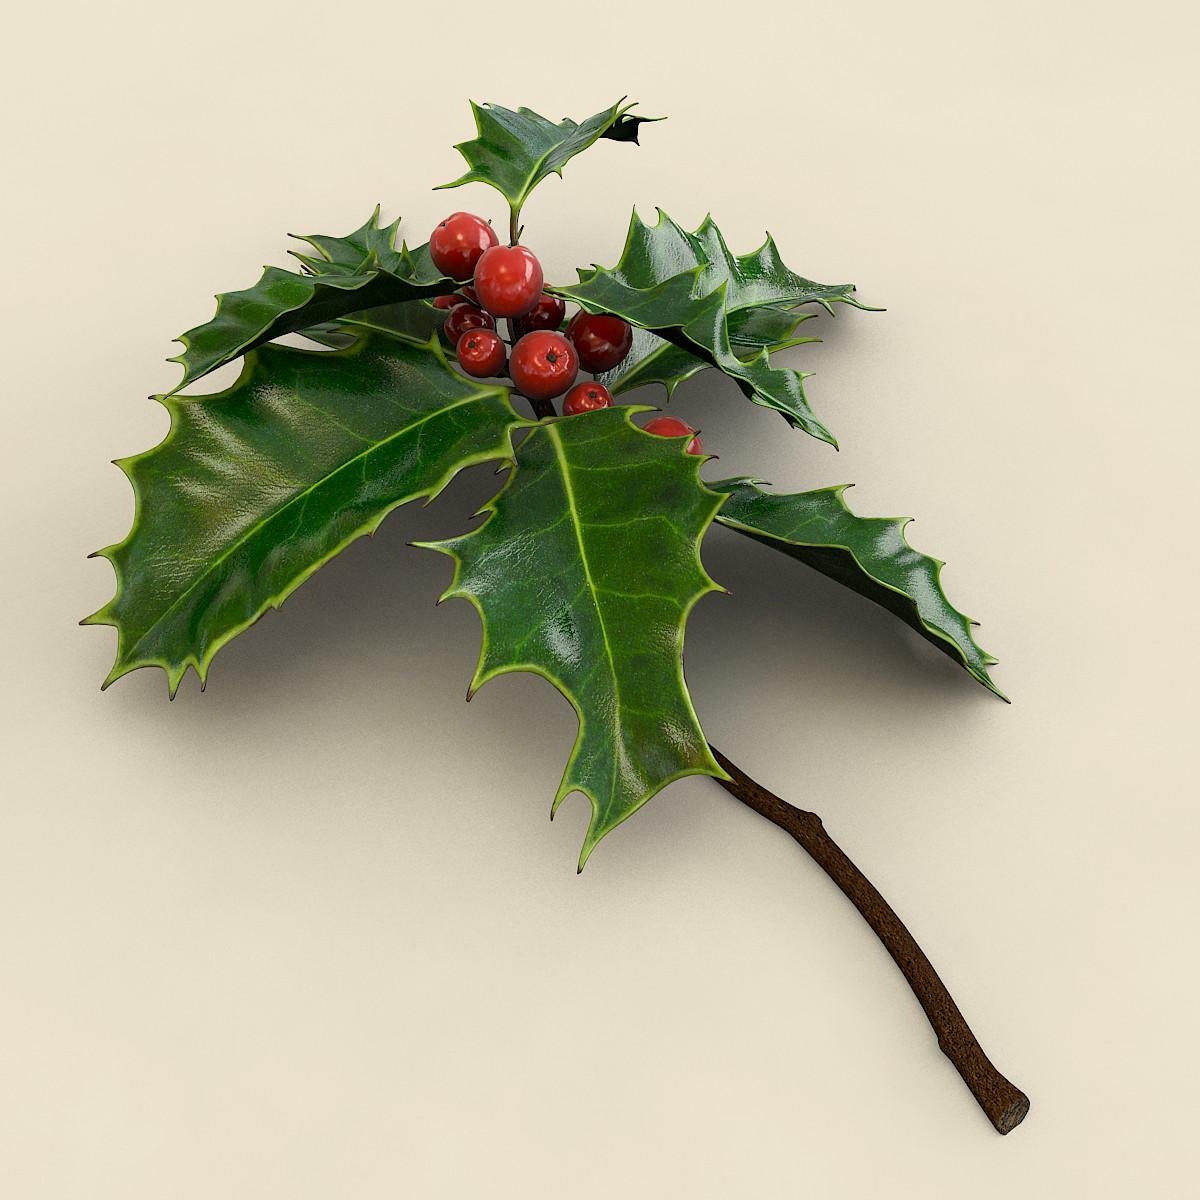 Spellcasting Focus: Sprig of Mistletoe